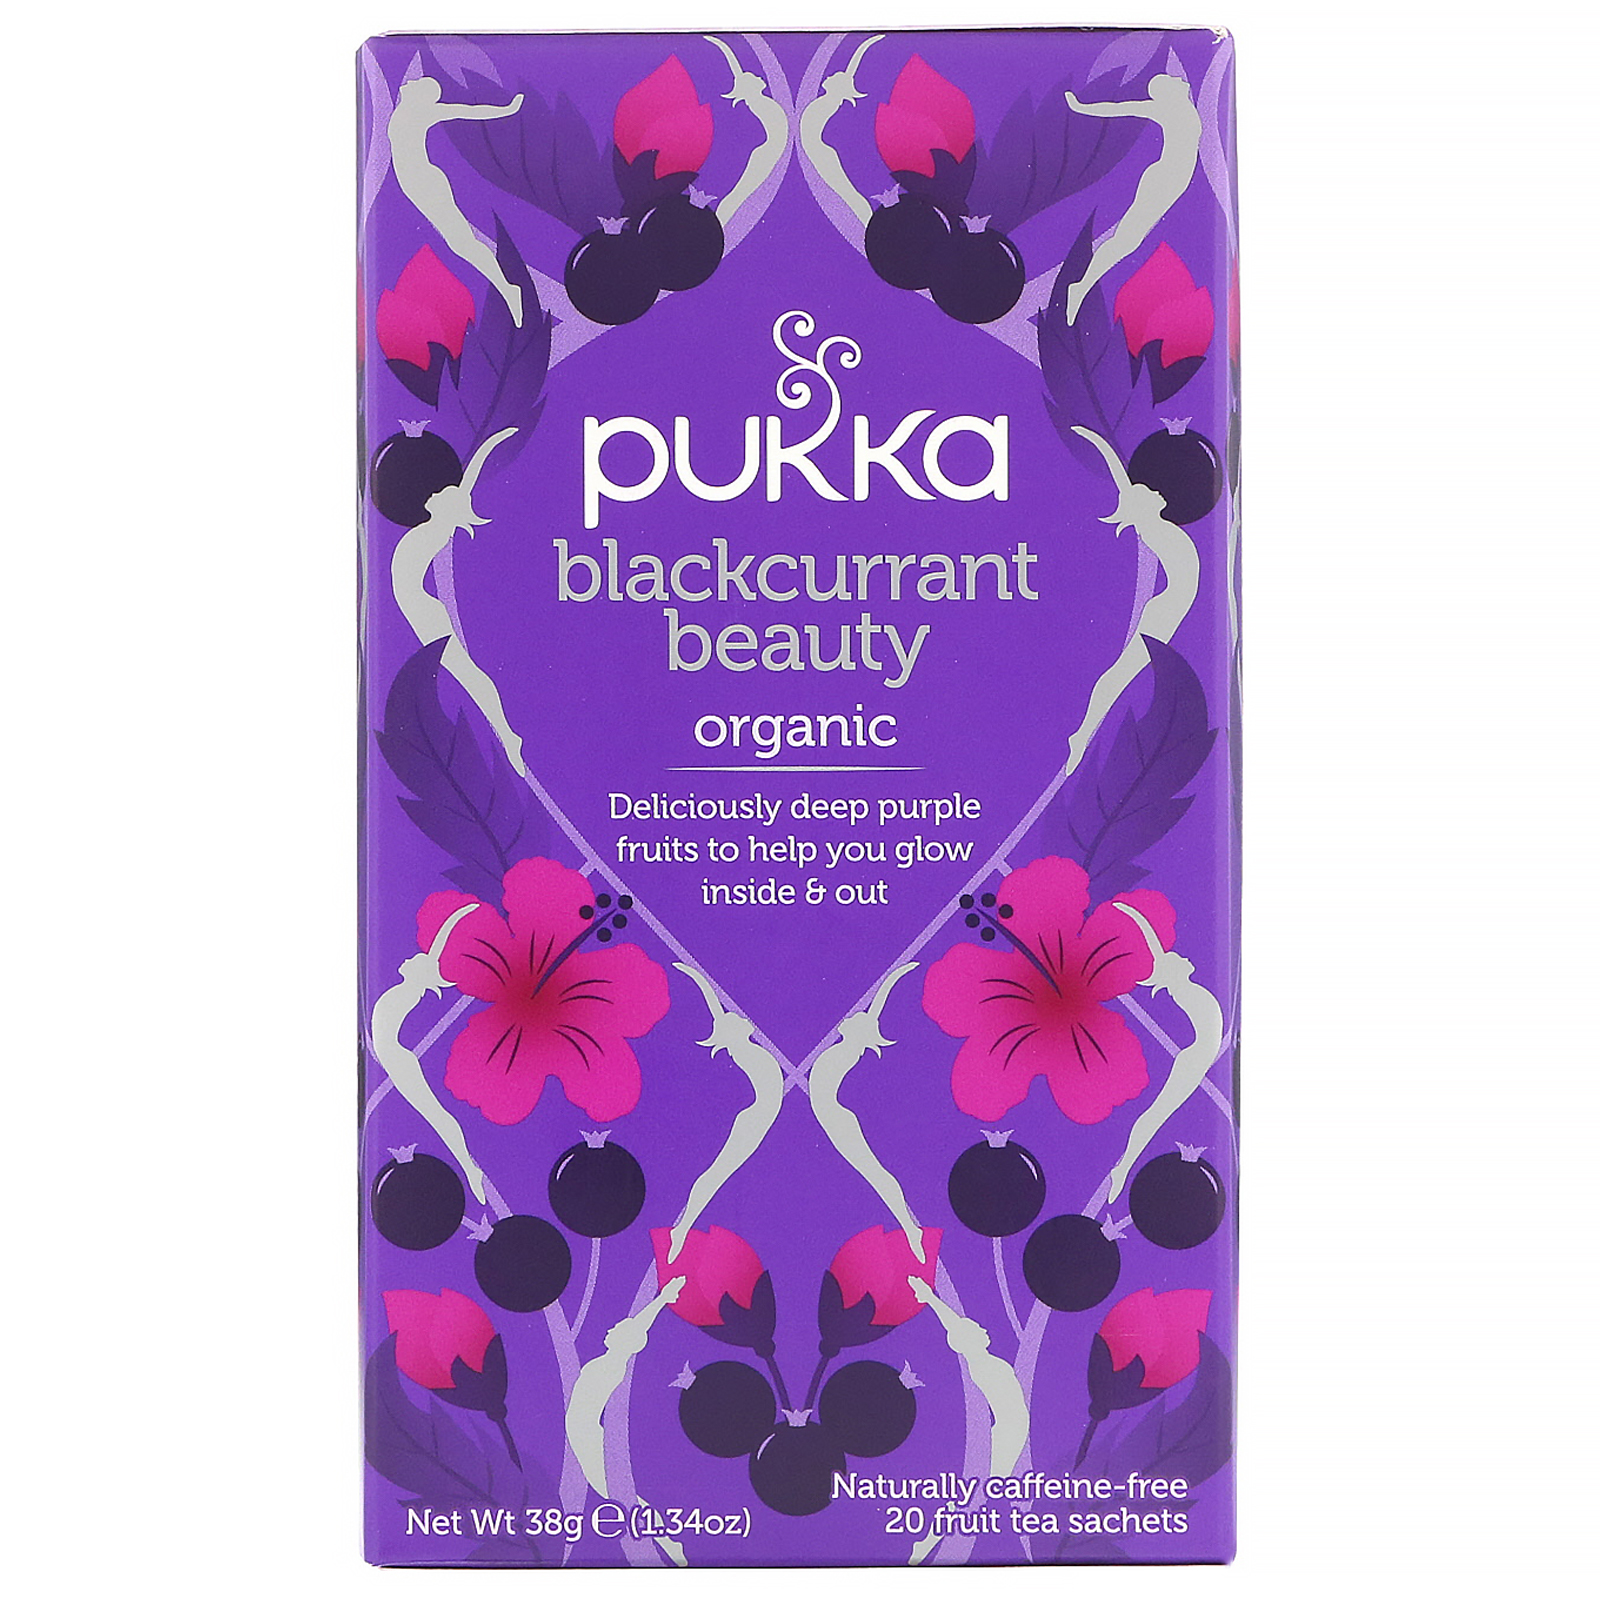 Pukka Blackcurrant Beauty Organic 20 Fruit Tea Sachets